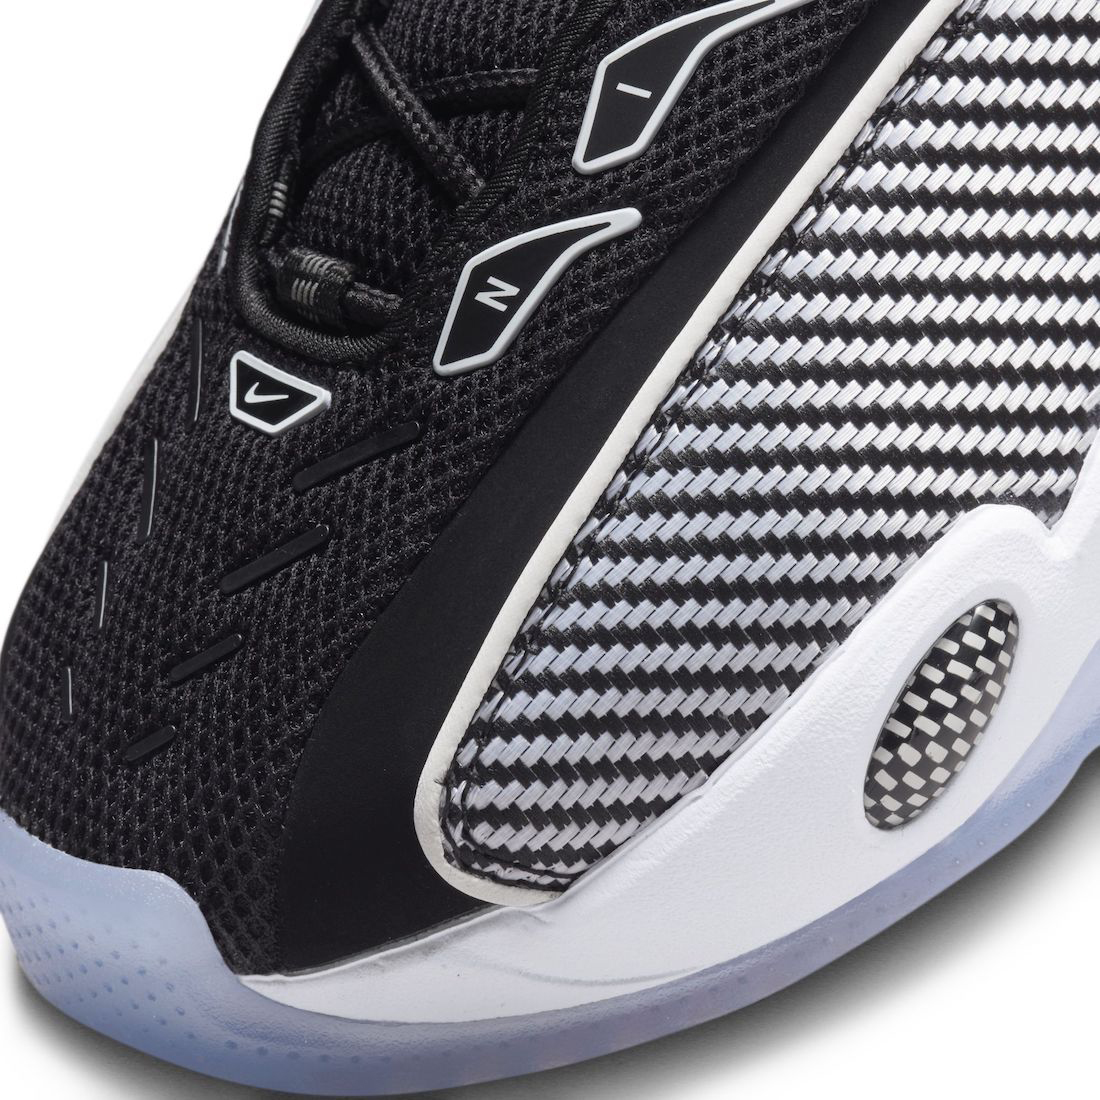 Nike-Nocta-Glide-Black-White-Release-Date-7